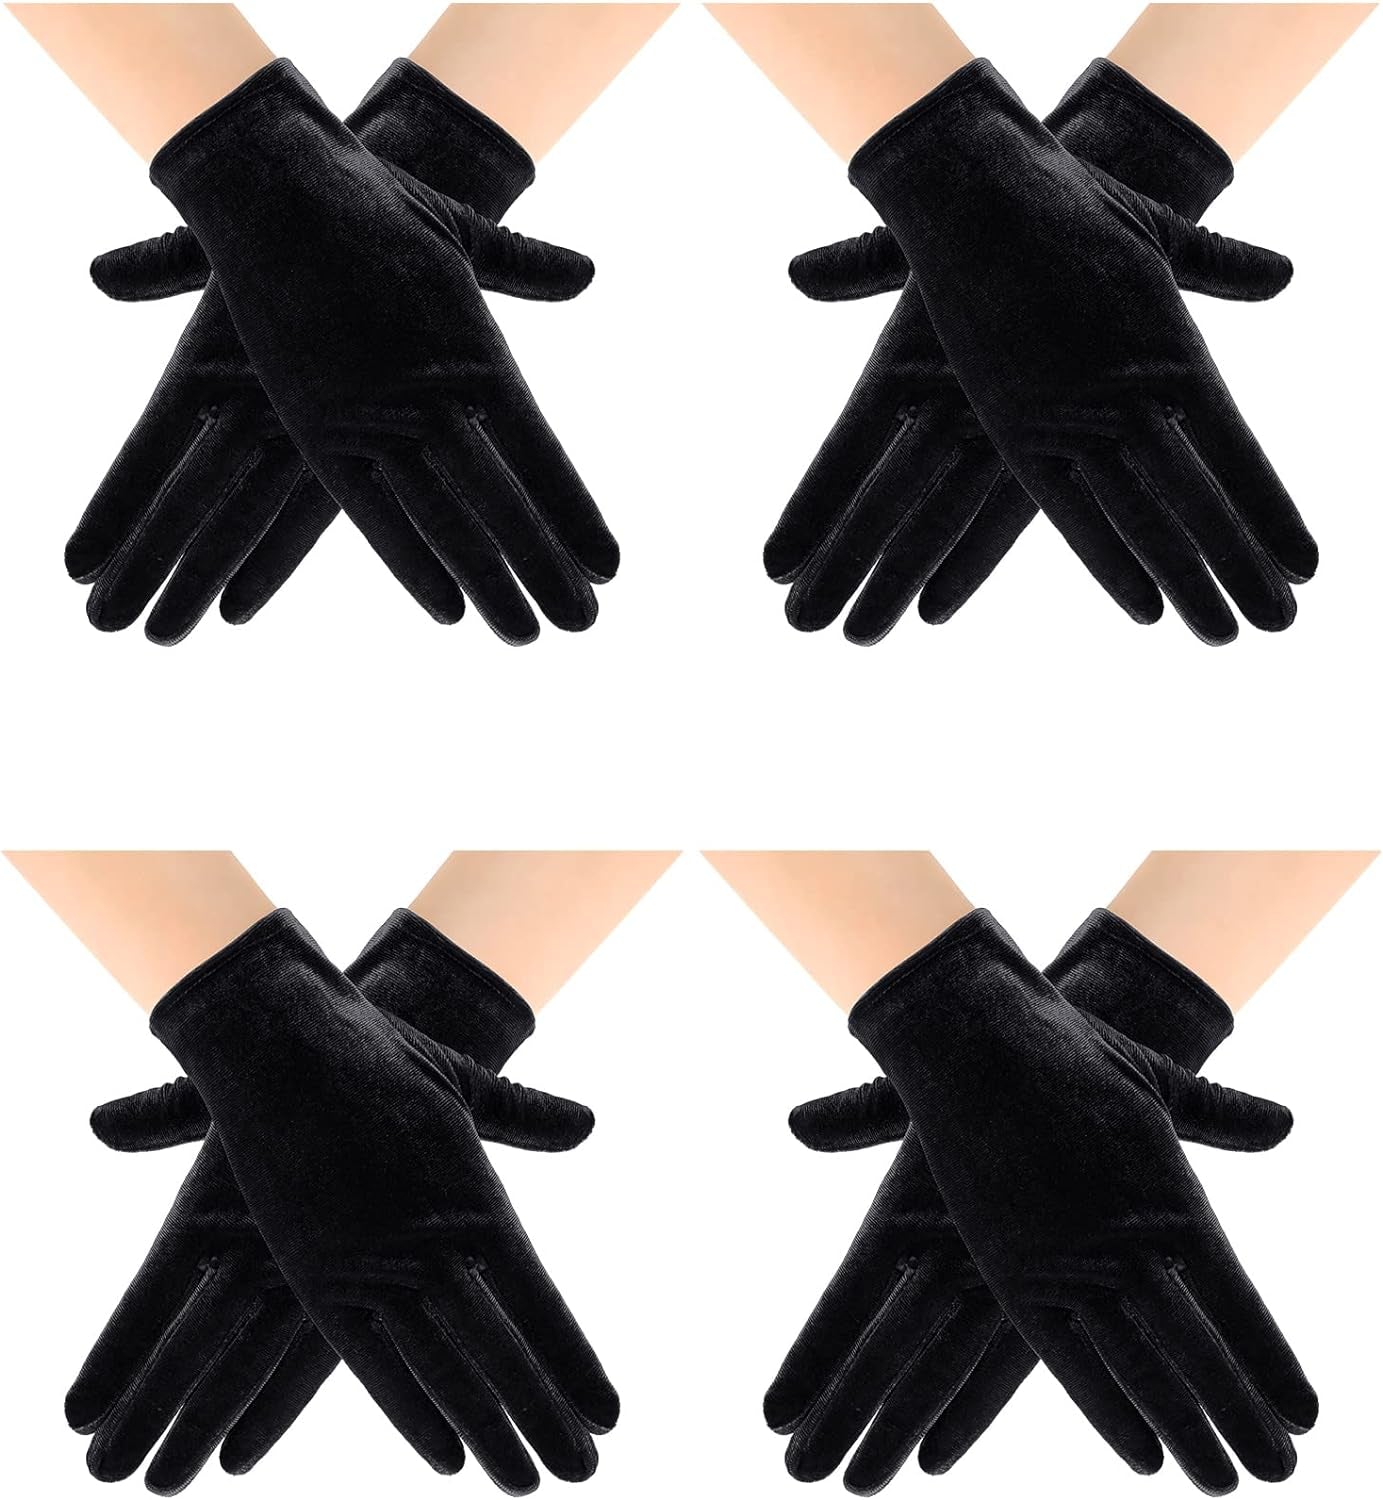 4 Pairs Short Opera Velvet Gloves Tea Party Gloves Women Wrist Banquet Gloves for Wedding Party Dancing Costume